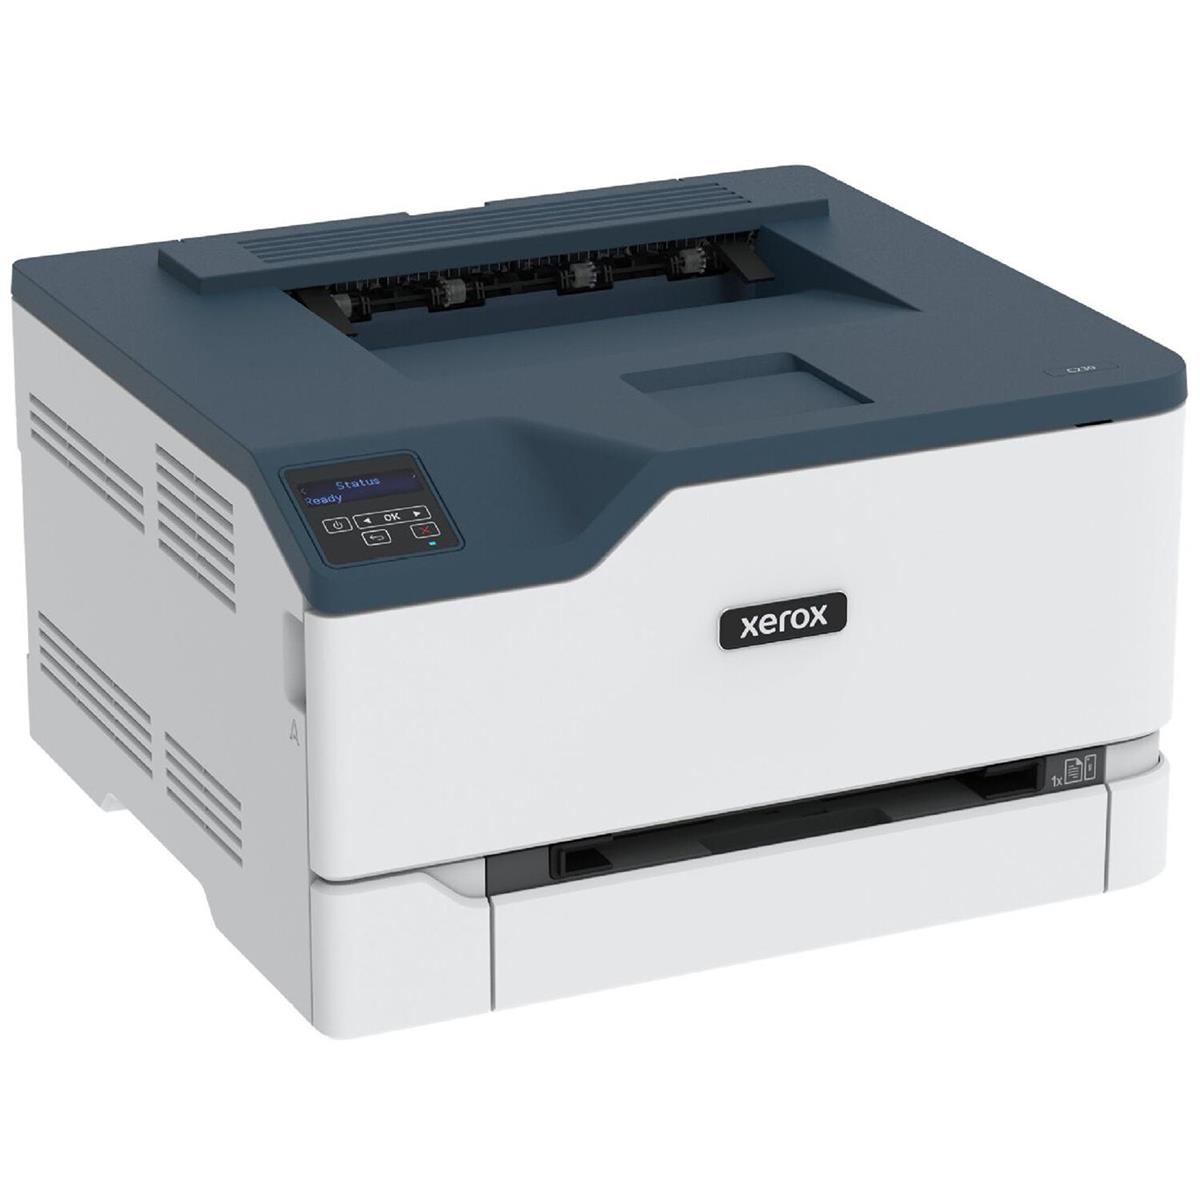 Image of Xerox C230 Color Laser Printer